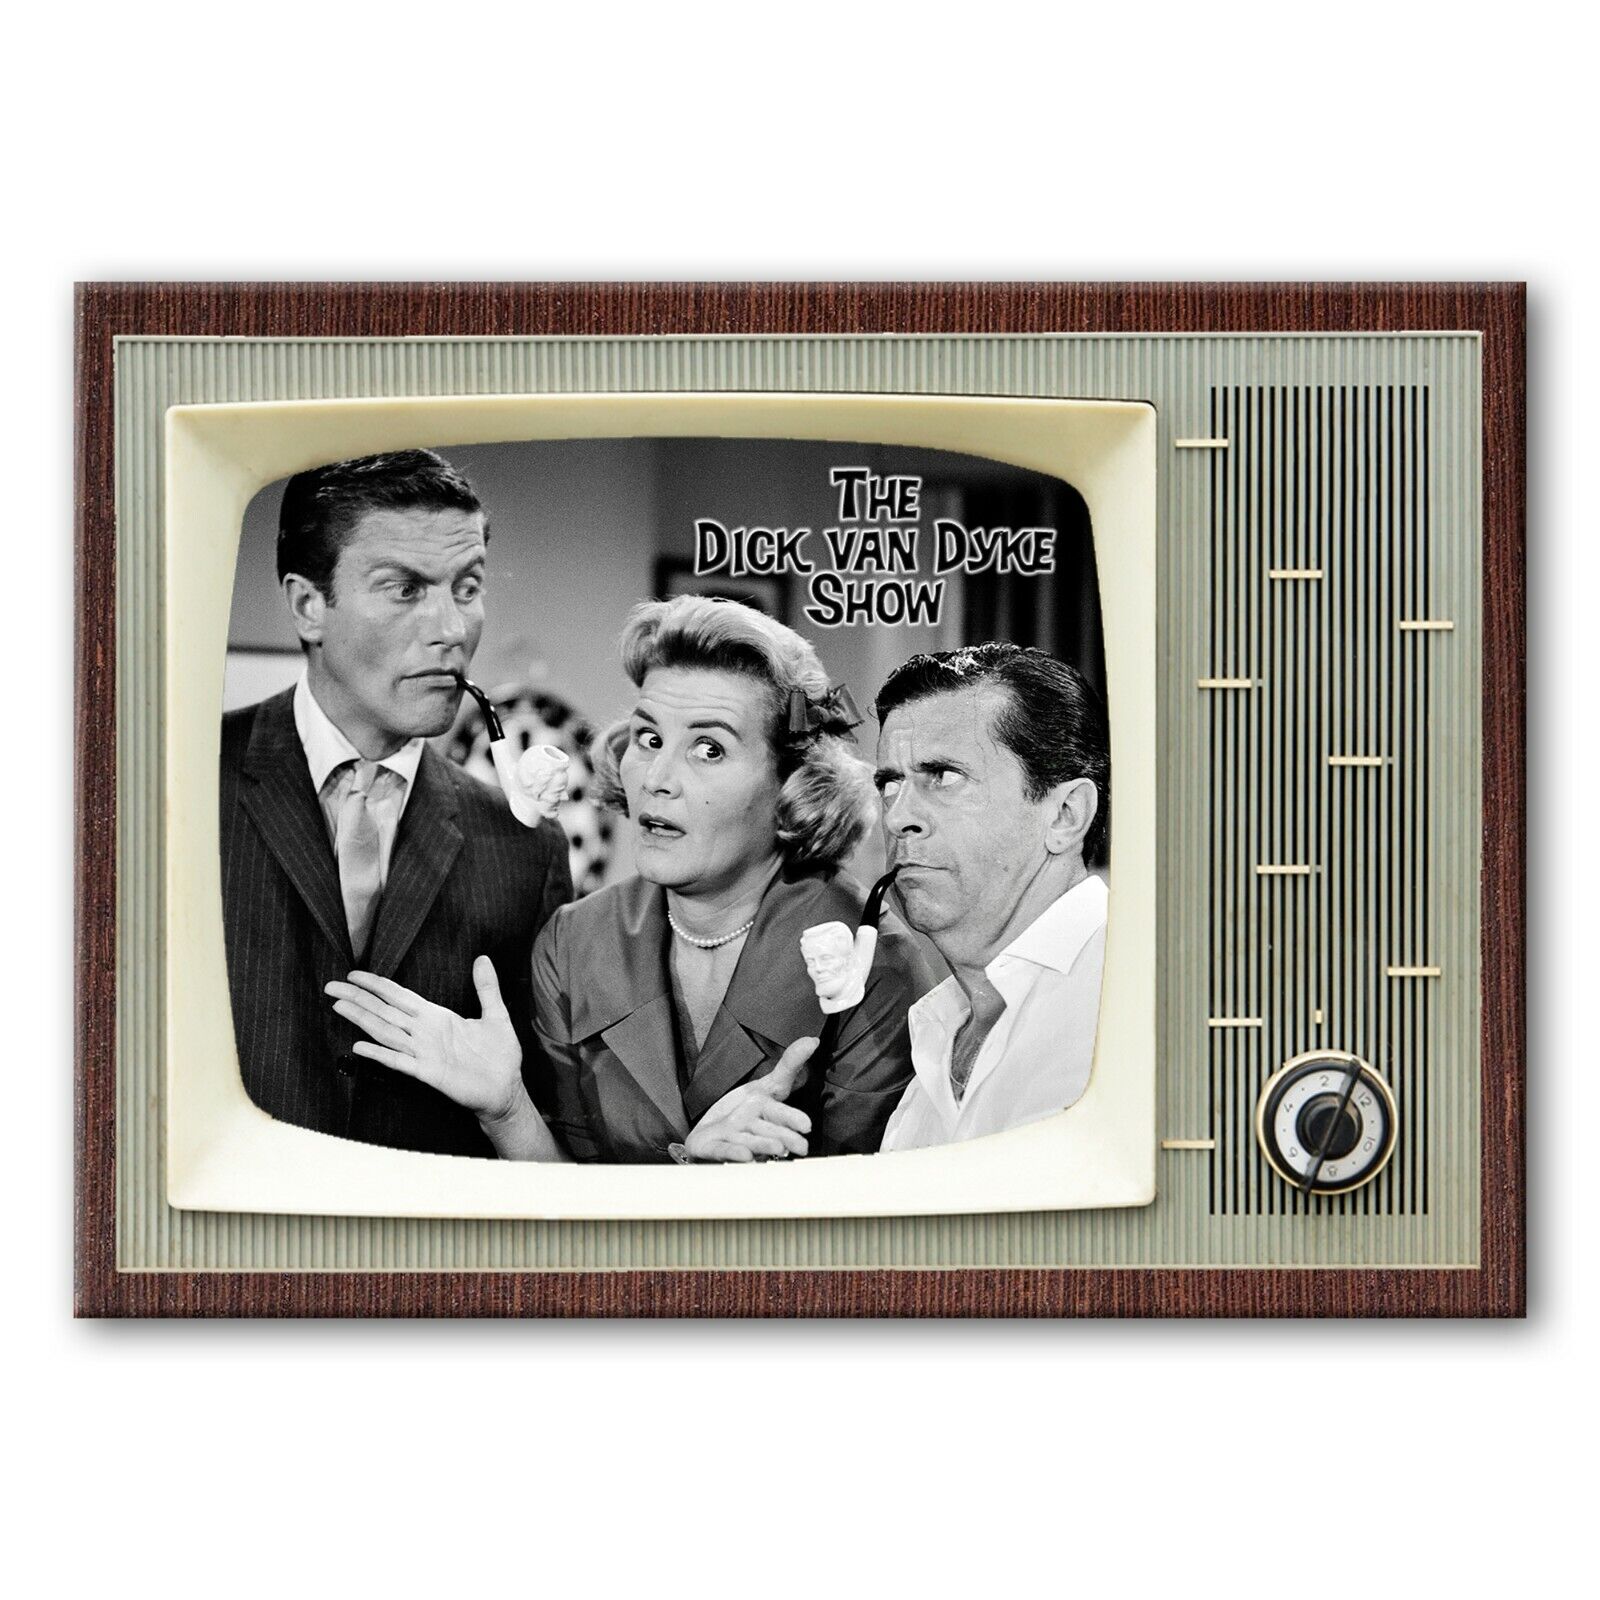 DICK VAN DYKE SHOW Classic TV 3.5 inches x 2.5 inches Steel FRIDGE MAGNET